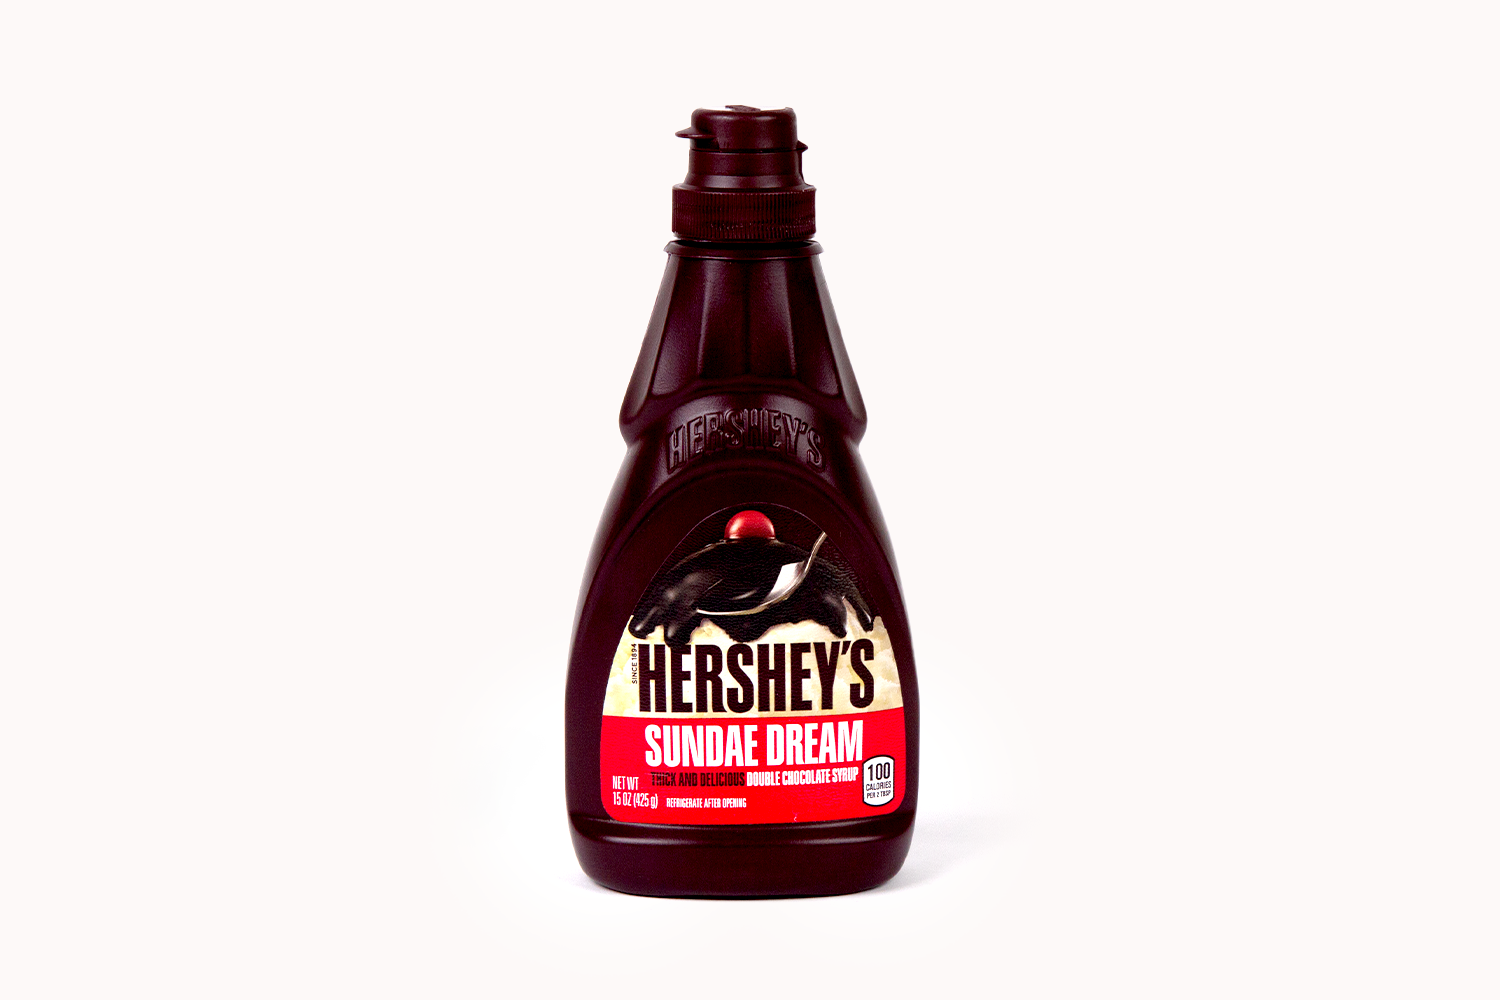 Hershey's Sundae Dream Double Chocolate Syrup